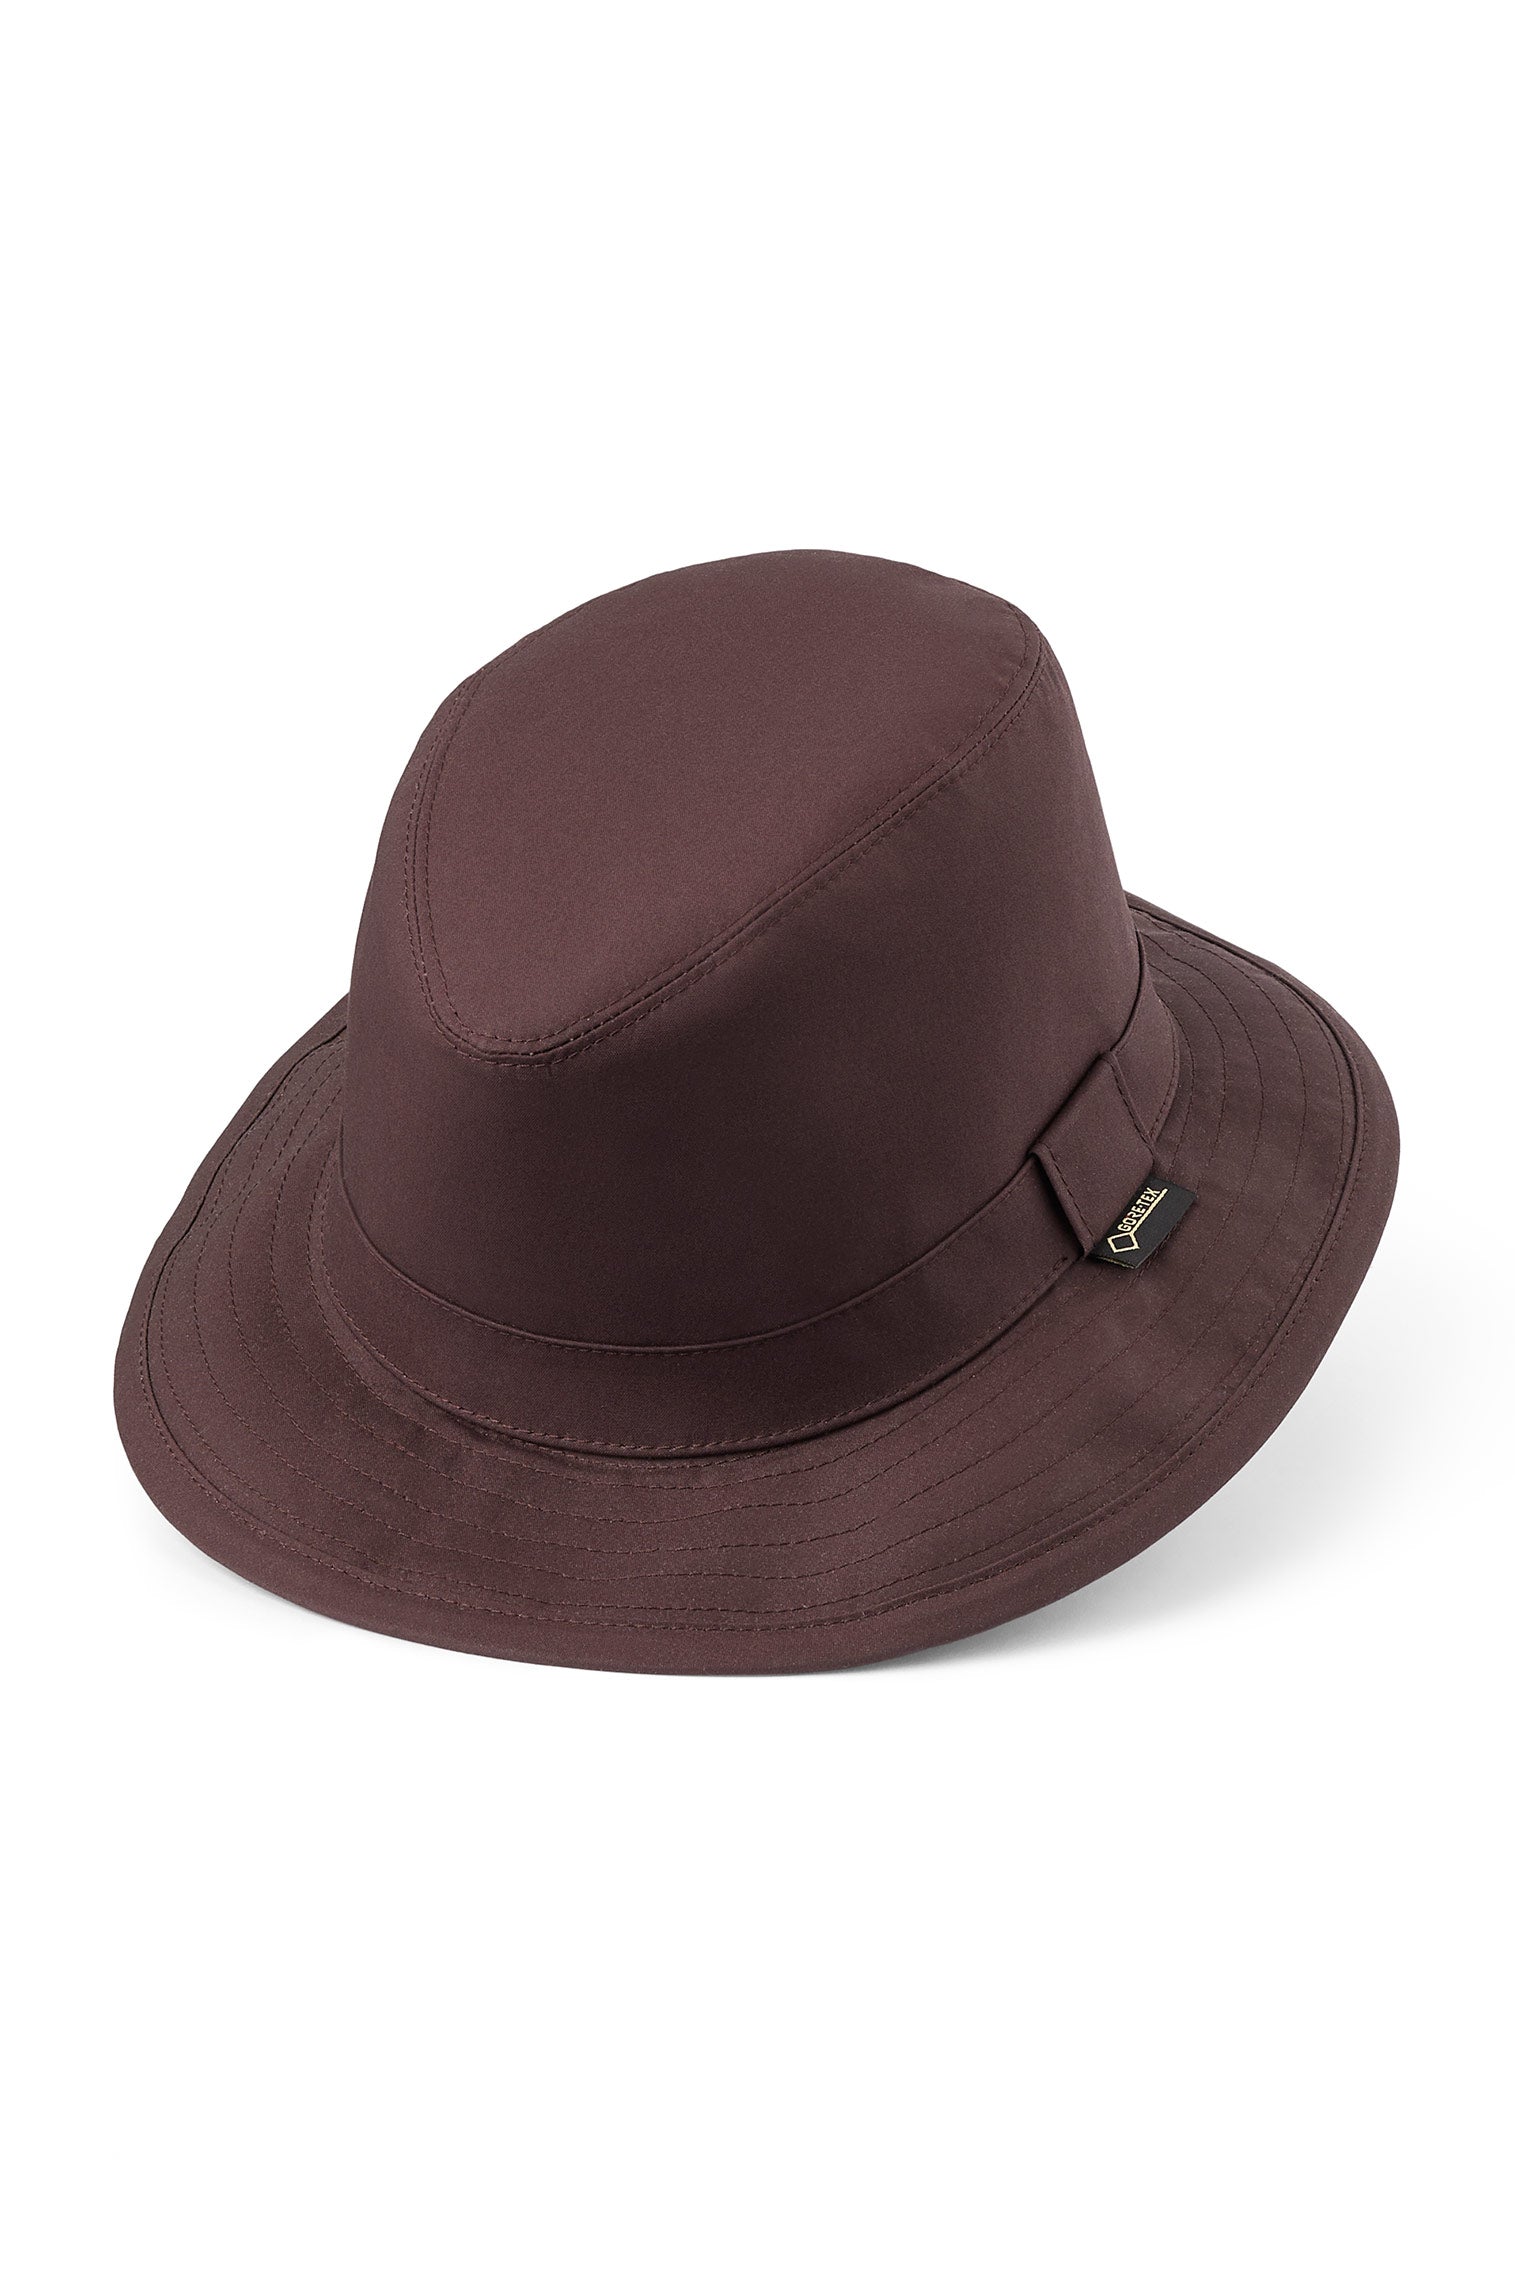 Tay GORE-TEX Hat - All Ready to Wear - Lock & Co. Hatters London UK